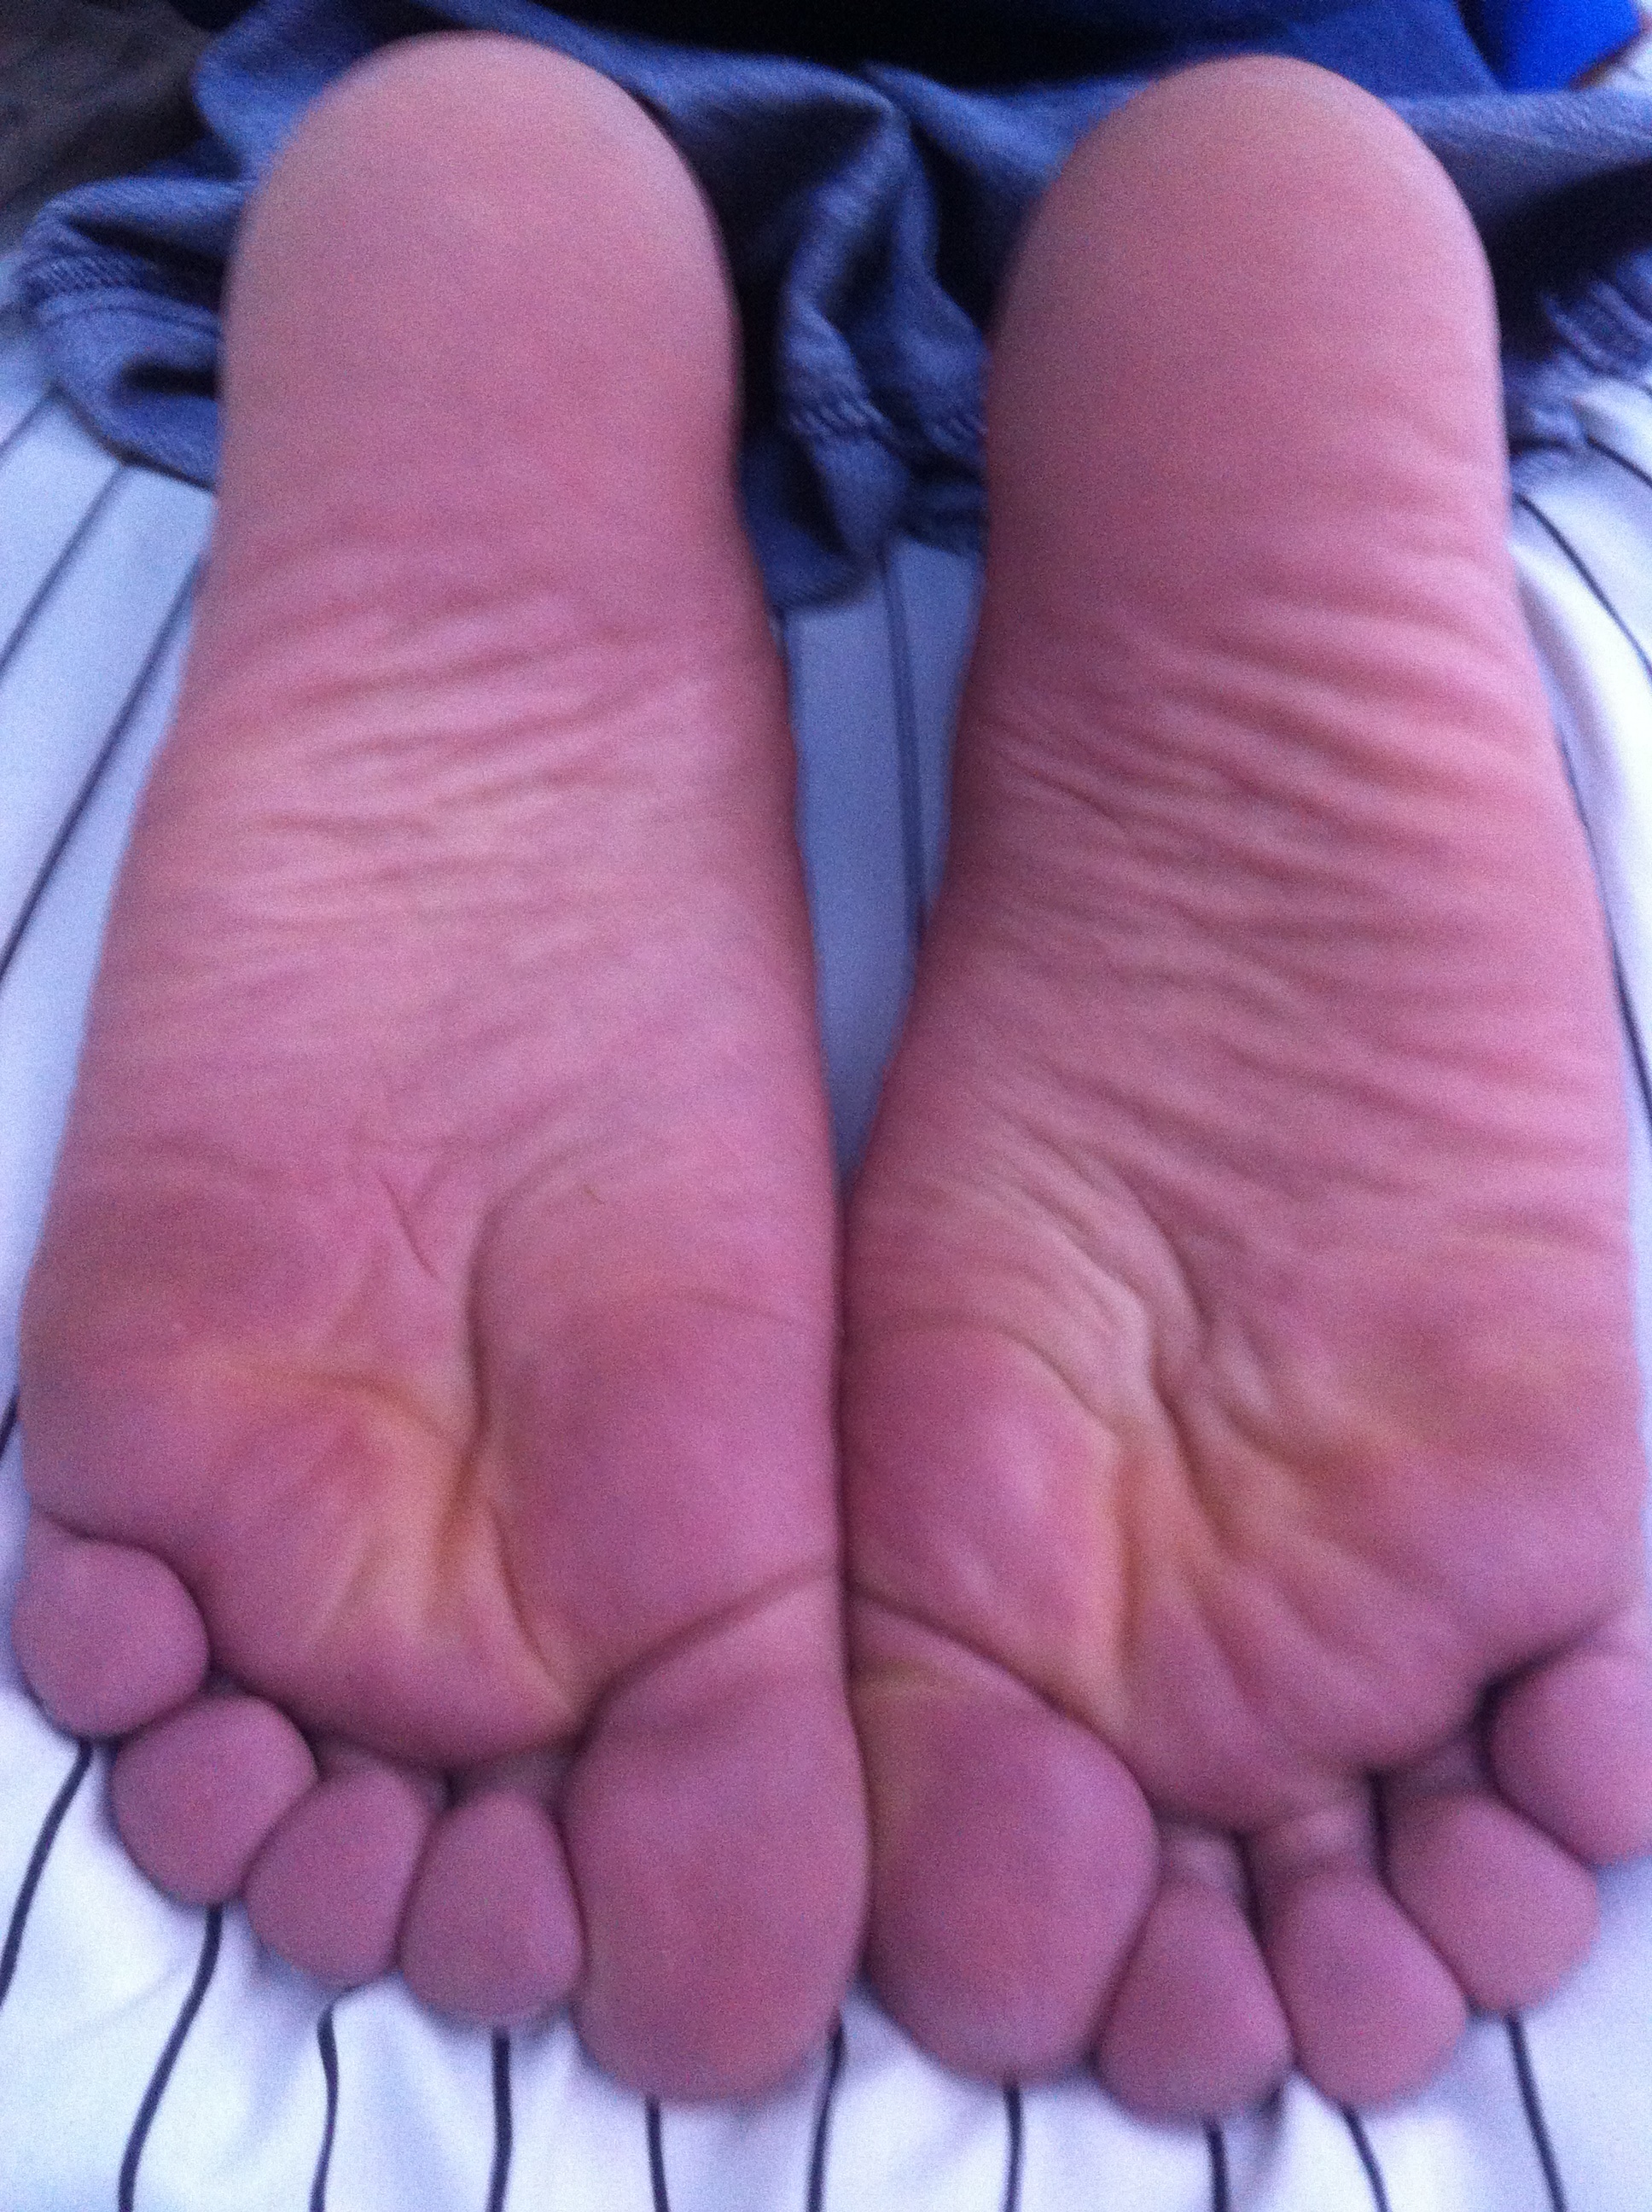 My feet after a fresh pedicure. 1/3